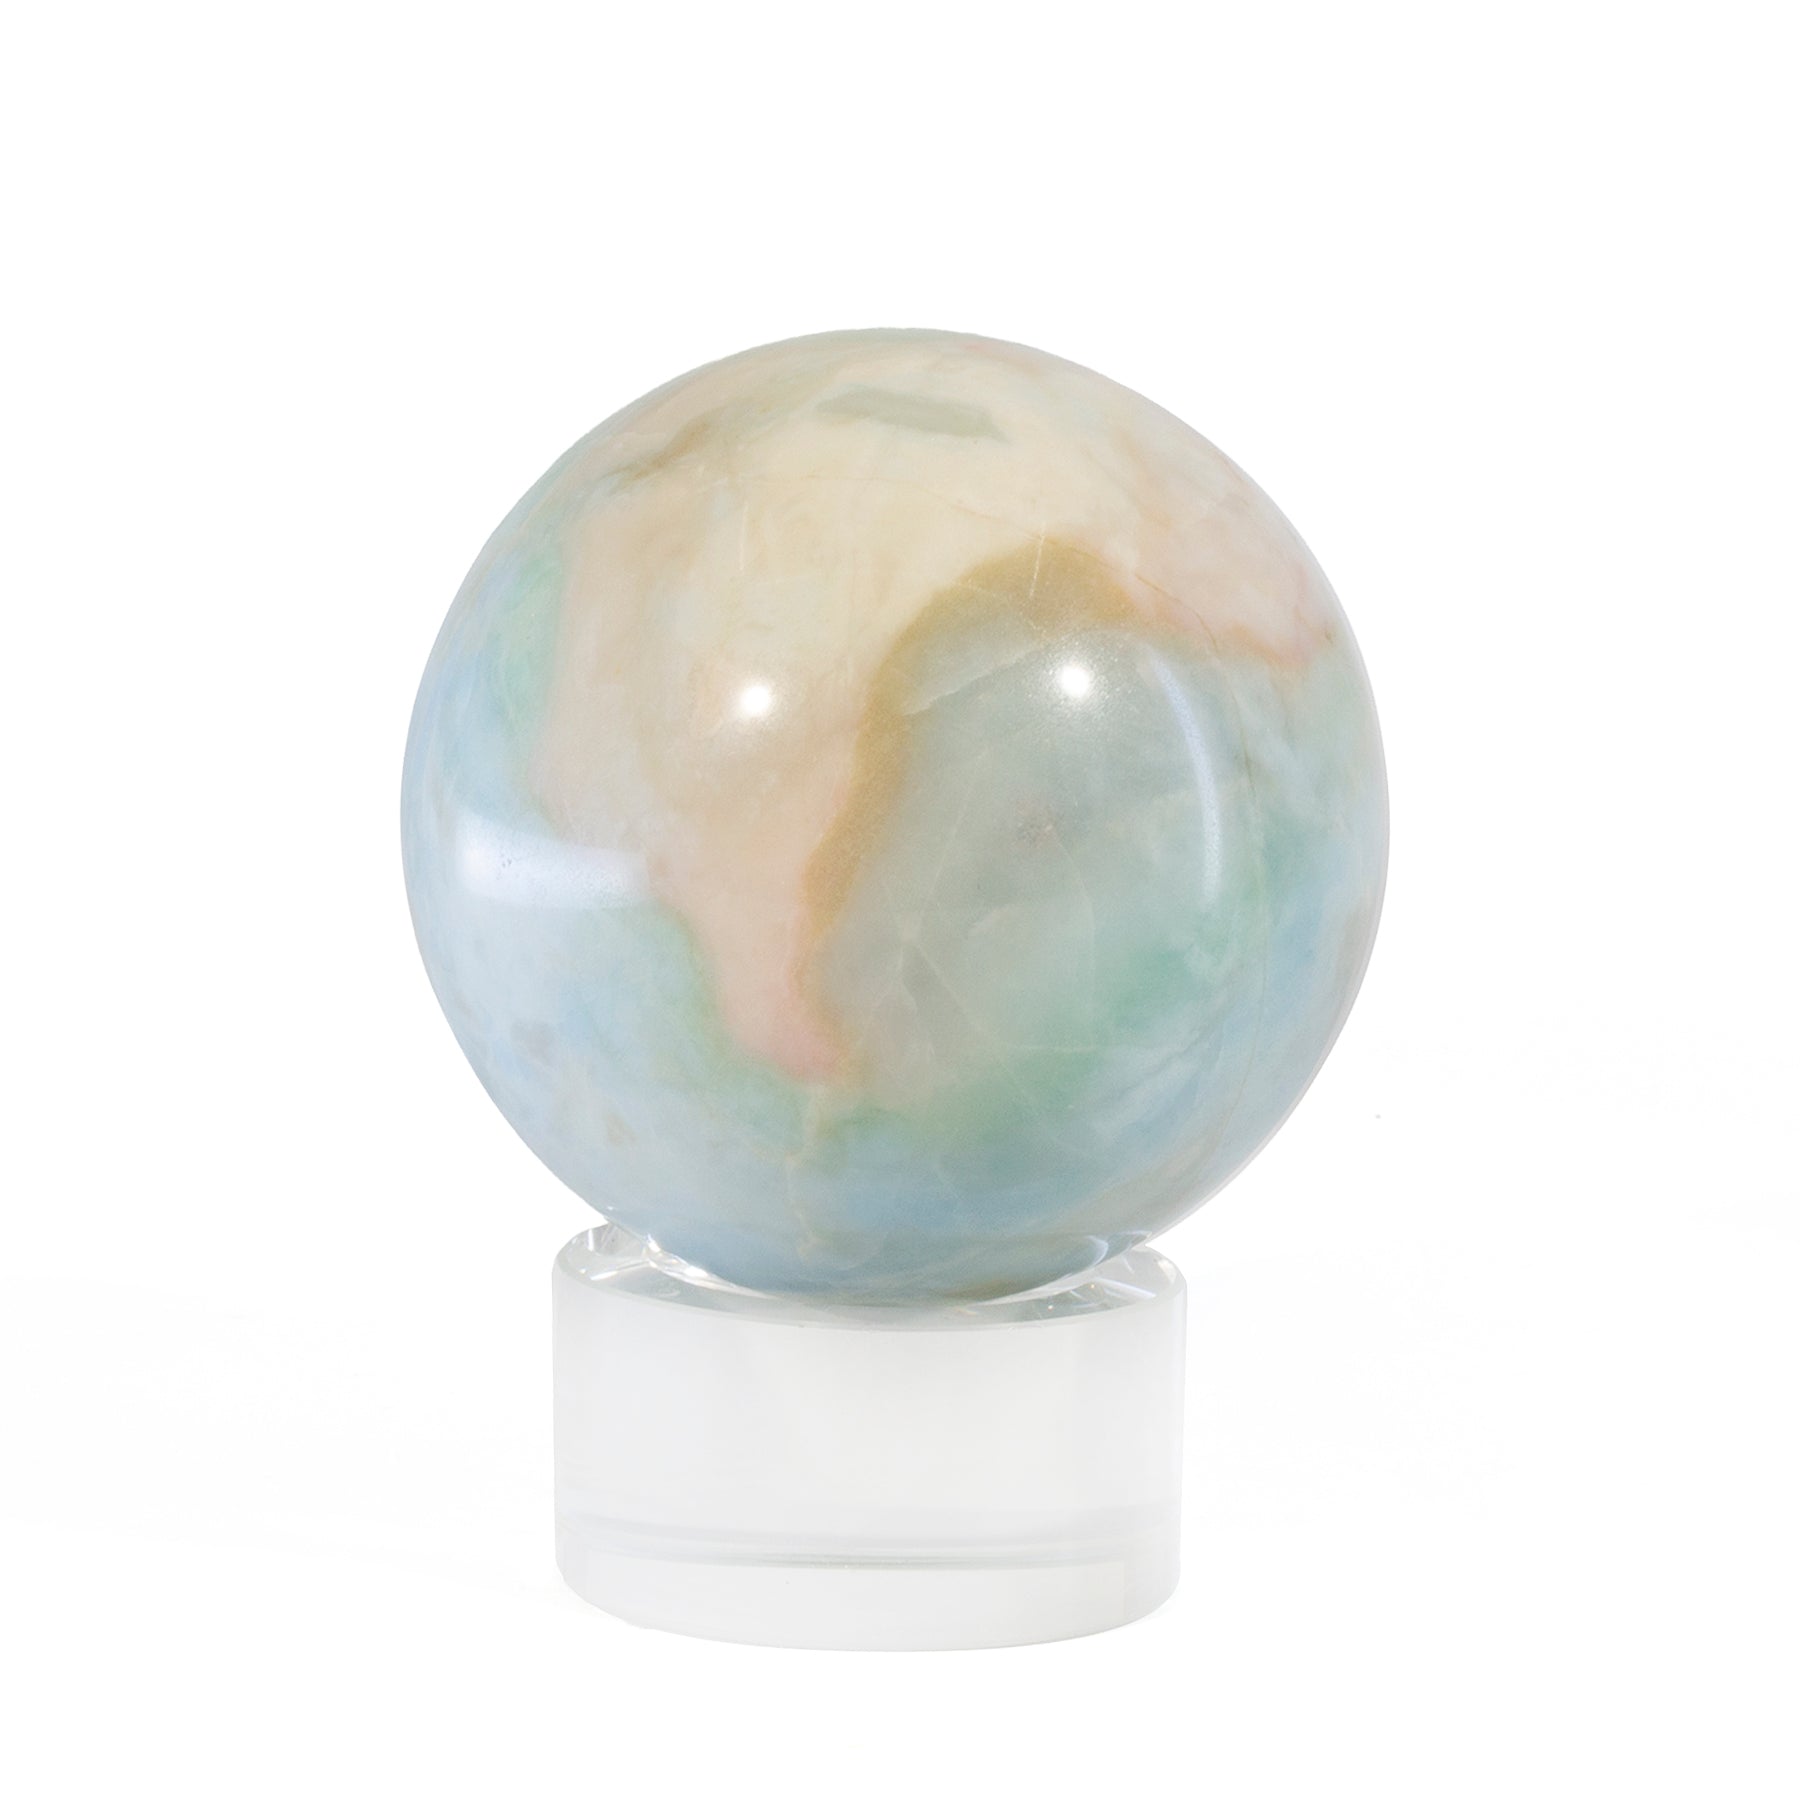 "Violane" Blue Diopside 2.3 inch 331 gram Polished Crystal Sphere - Russia - GGL-118 - Crystalarium